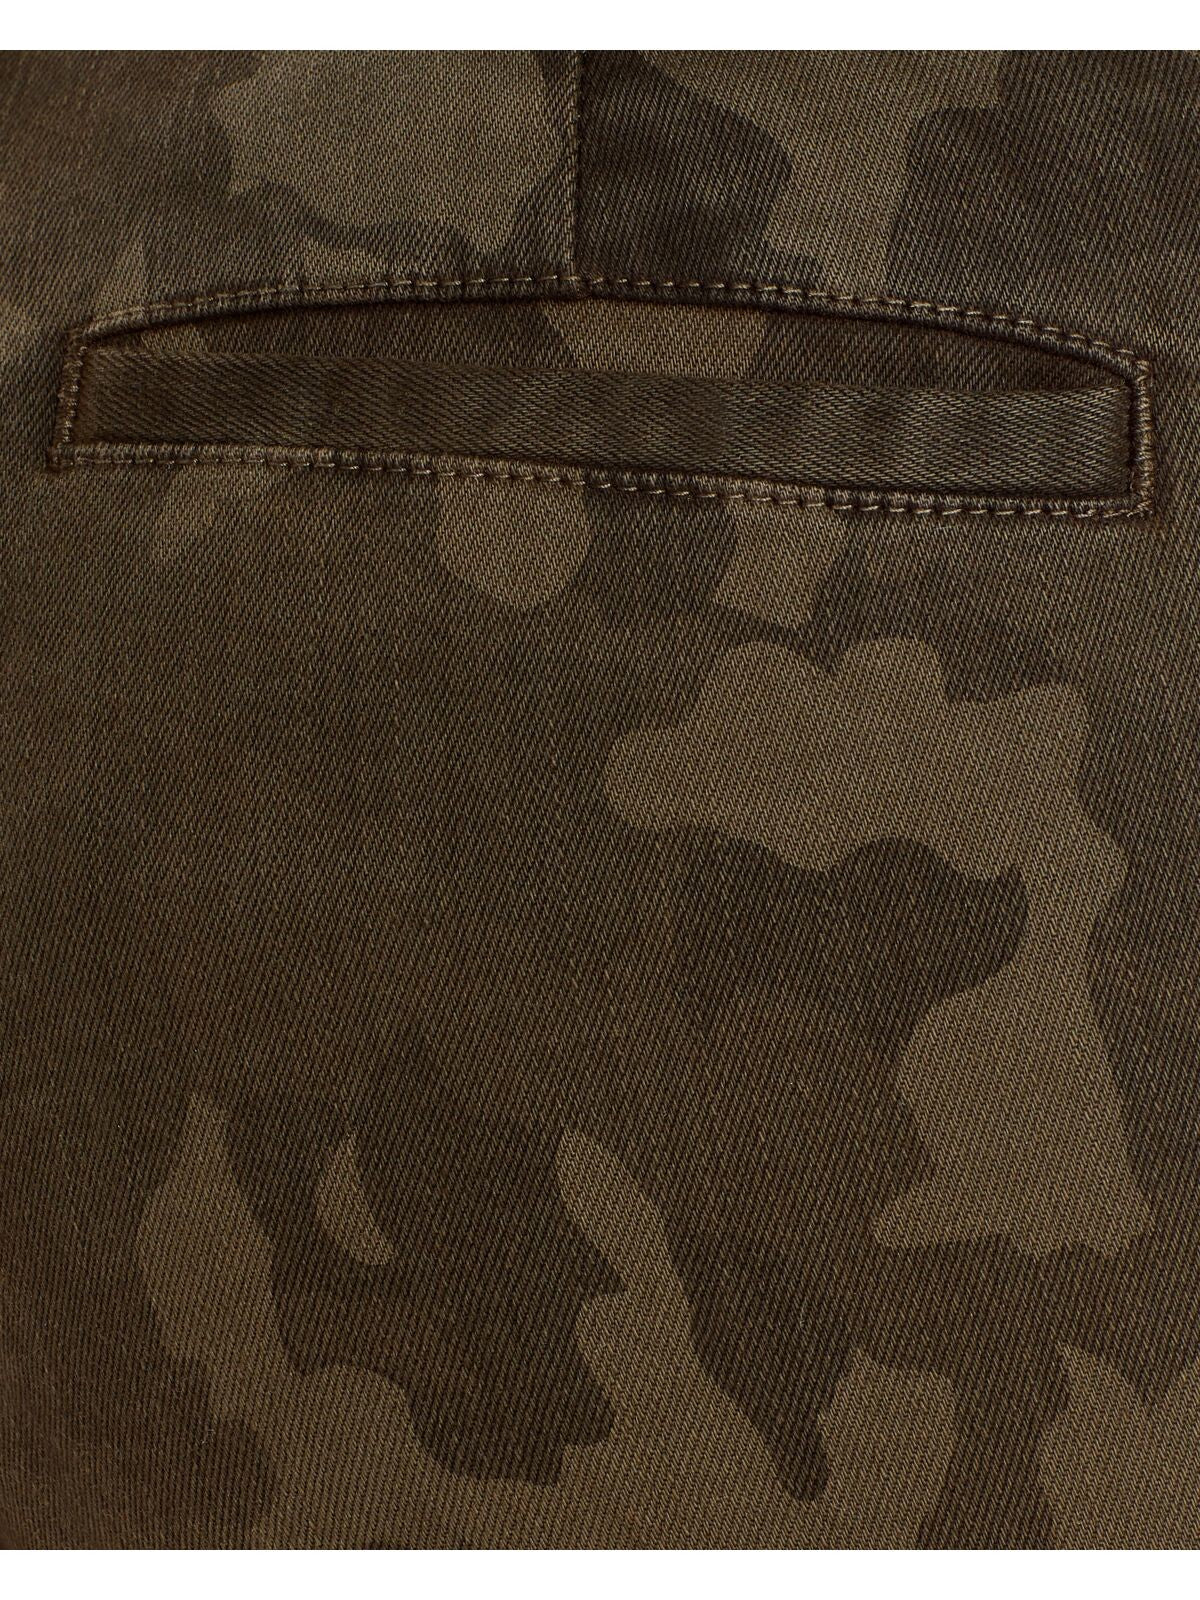 AQUA Womens Pocketed Camouflage Cargo Pants